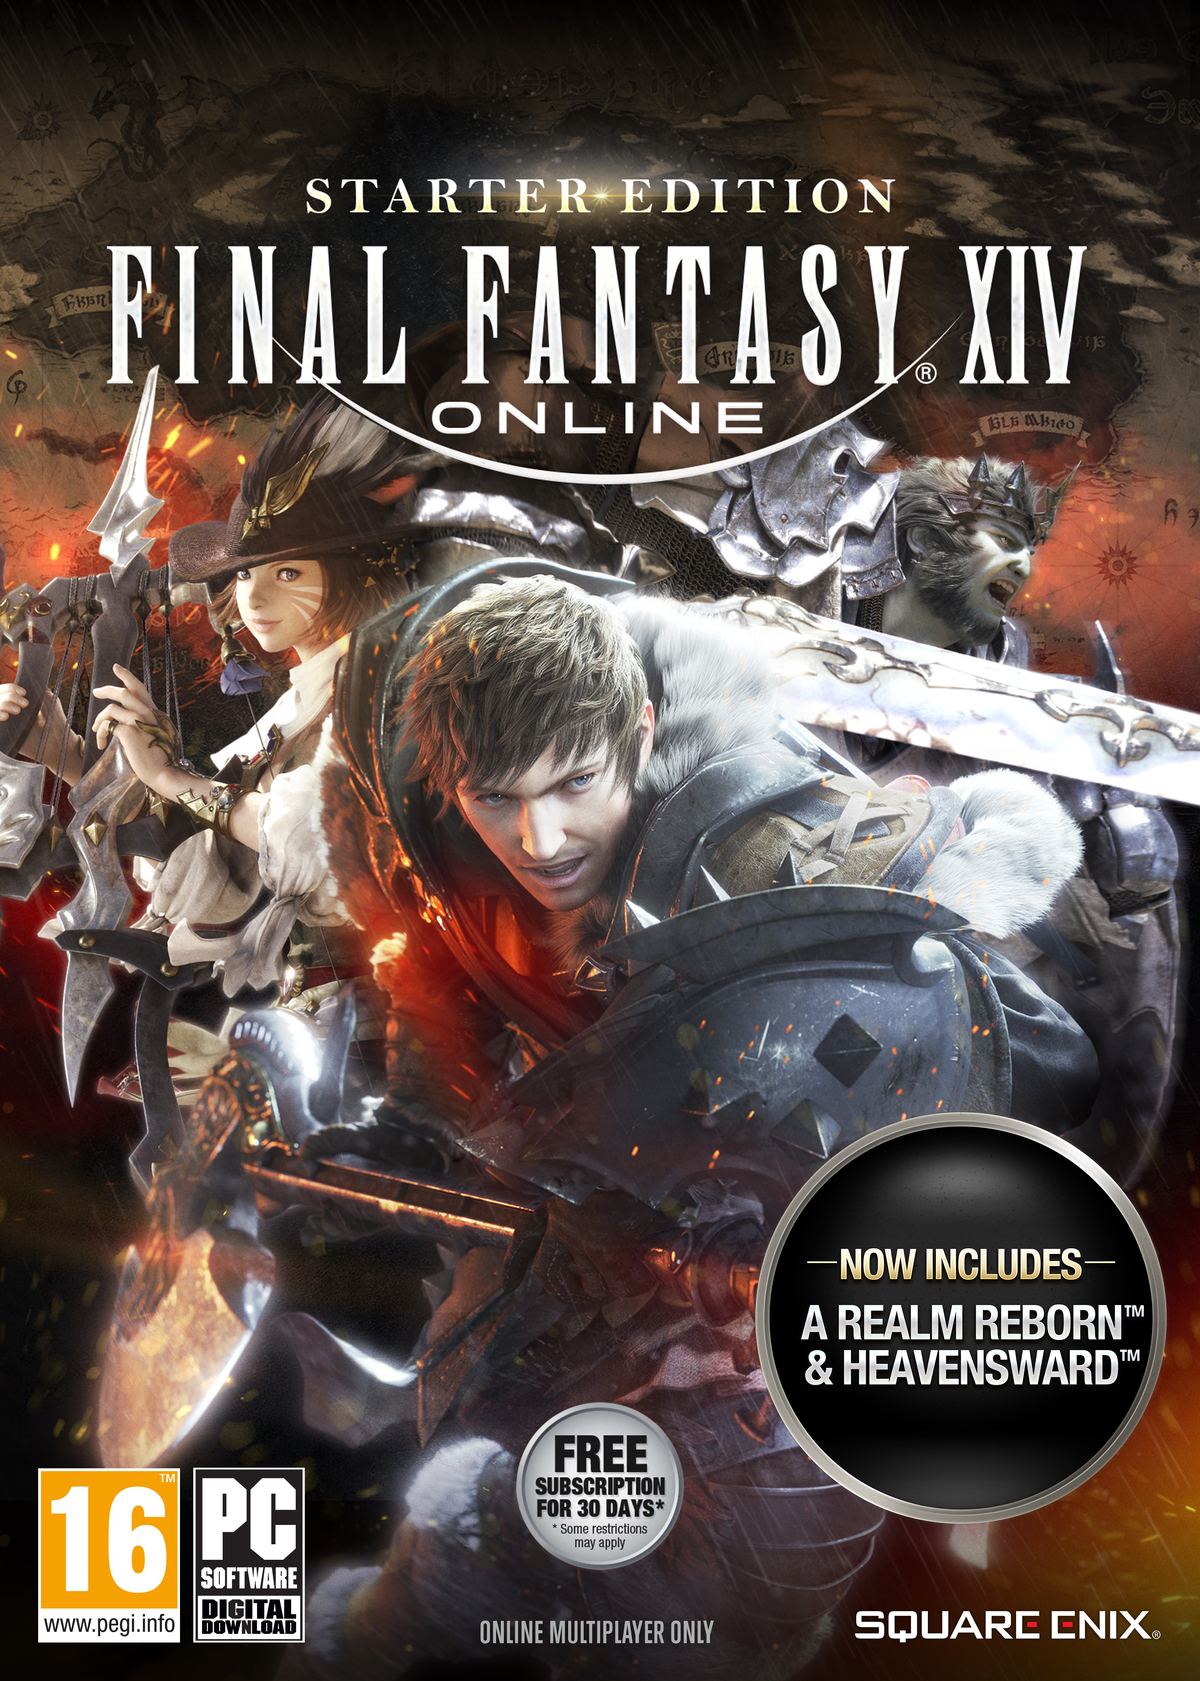 final fantasy xiv pc download free full version